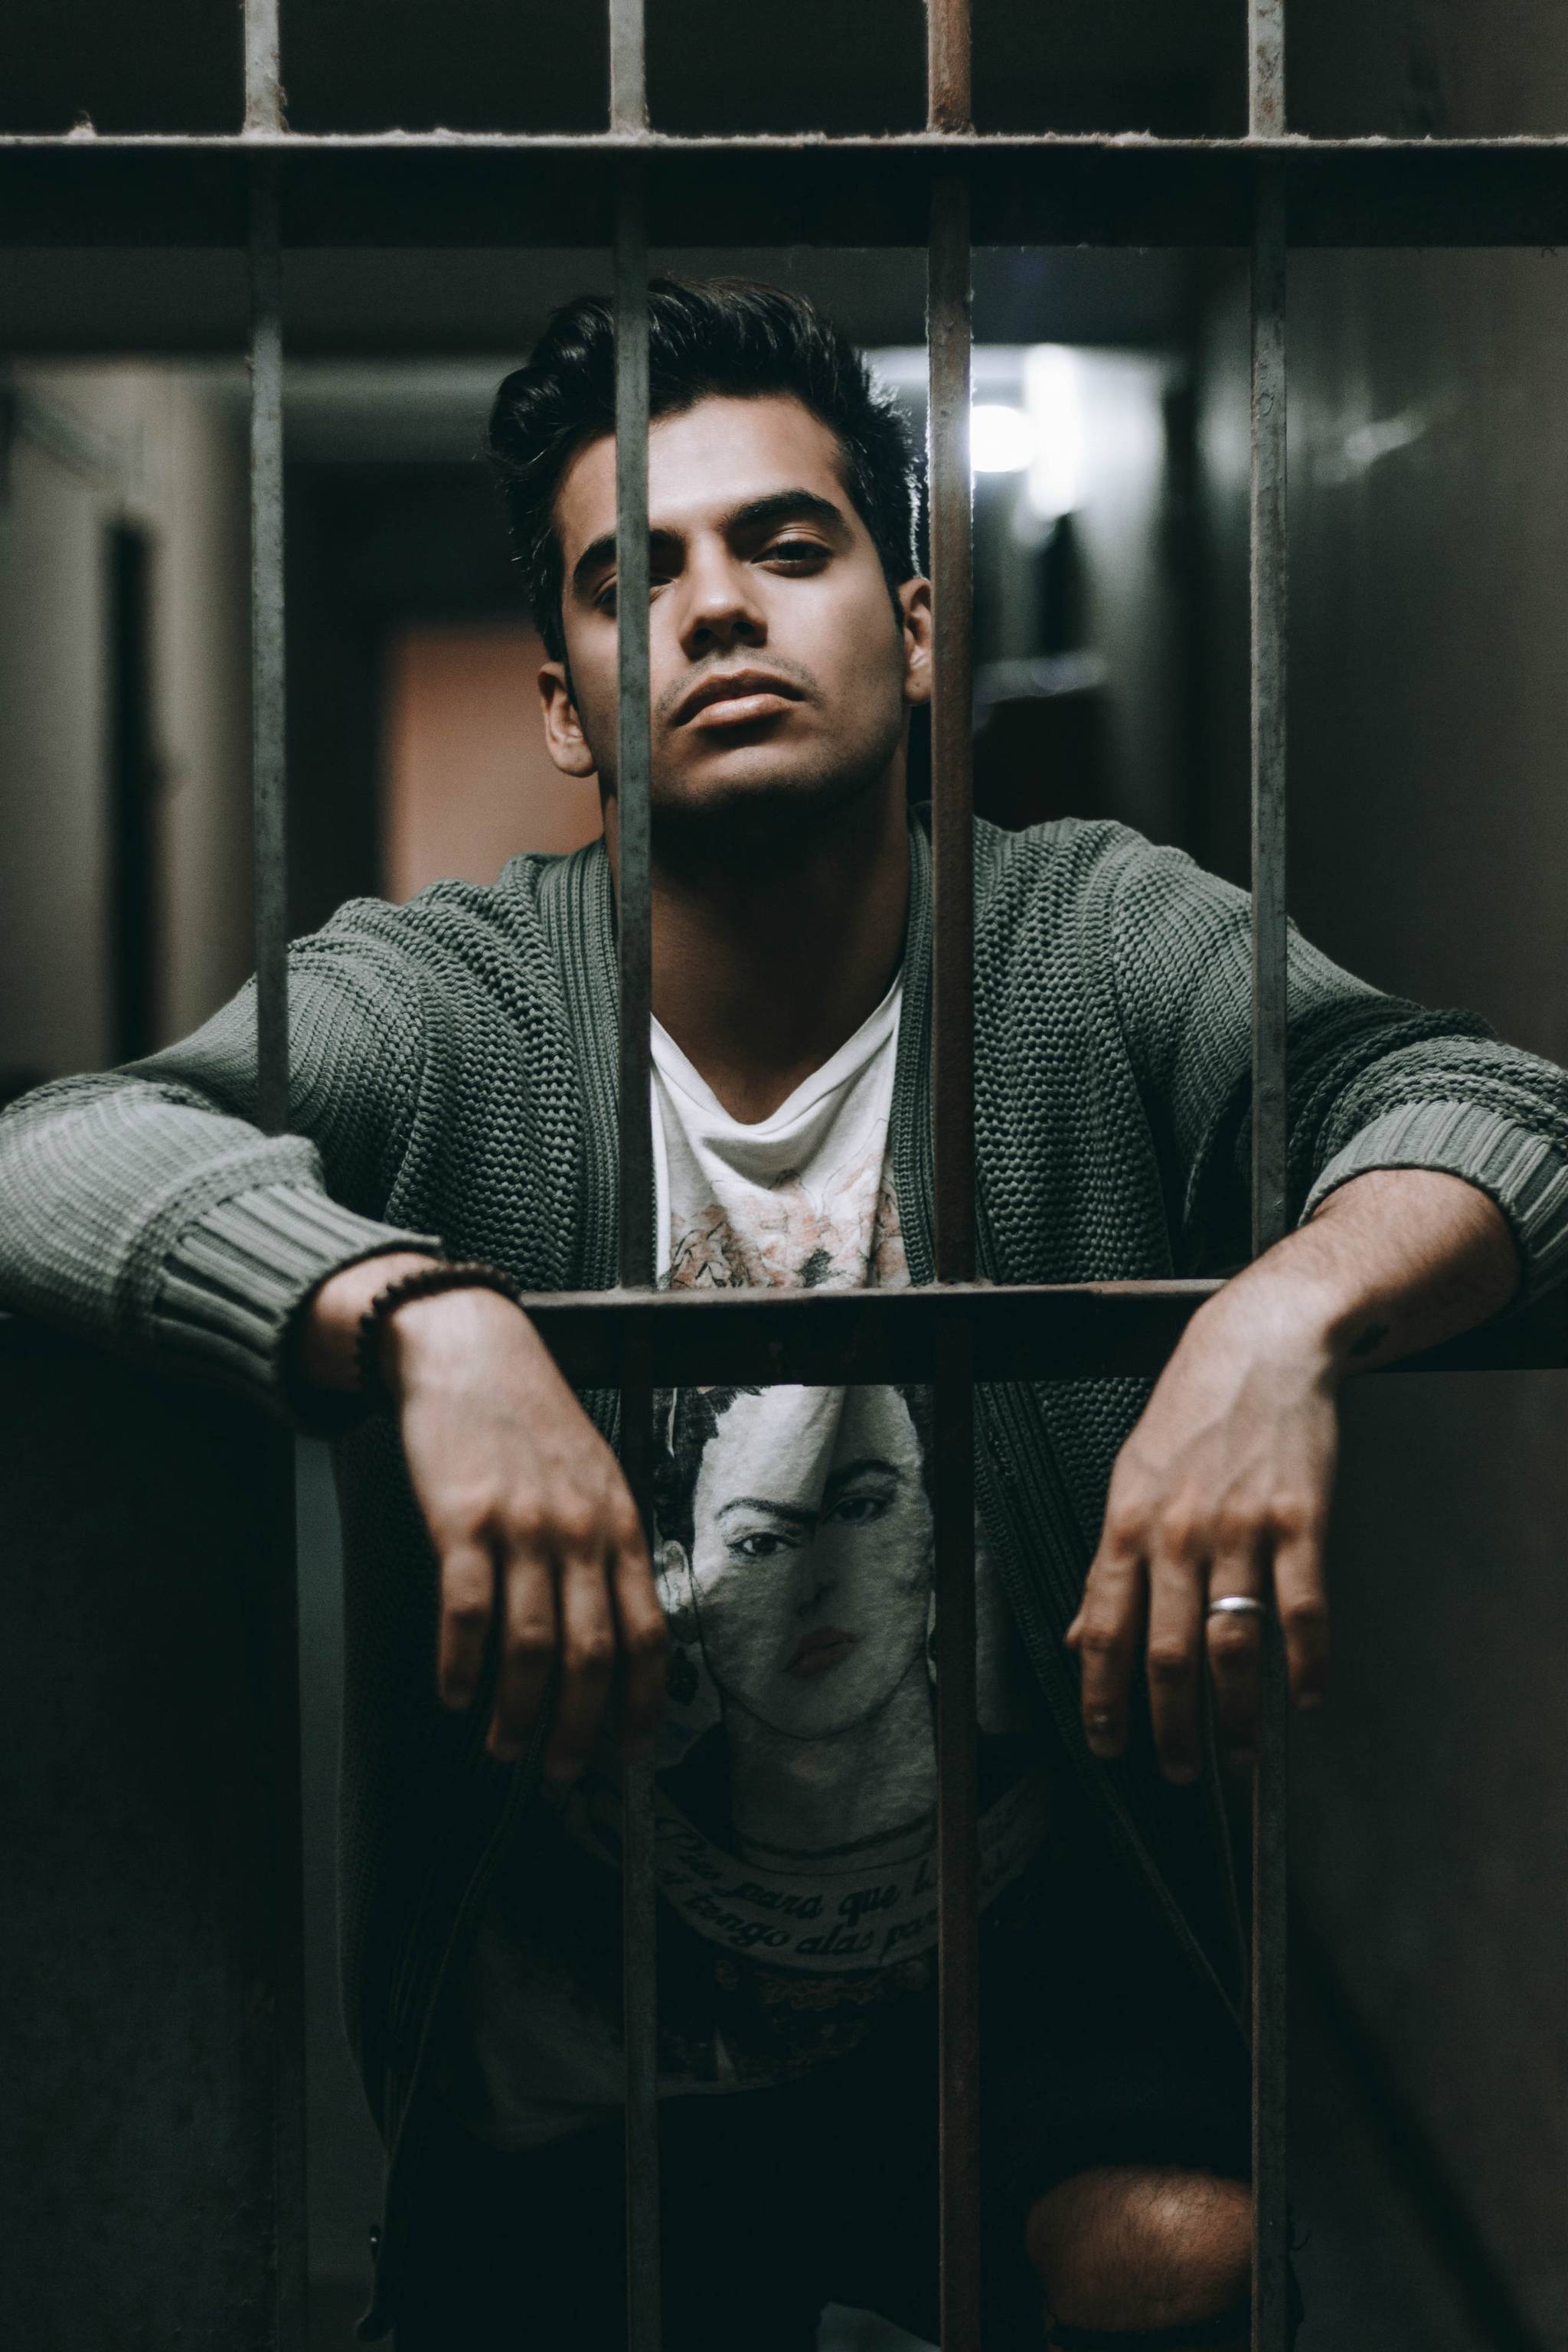 Empathetic prisons in Brazil focus on inmate reform